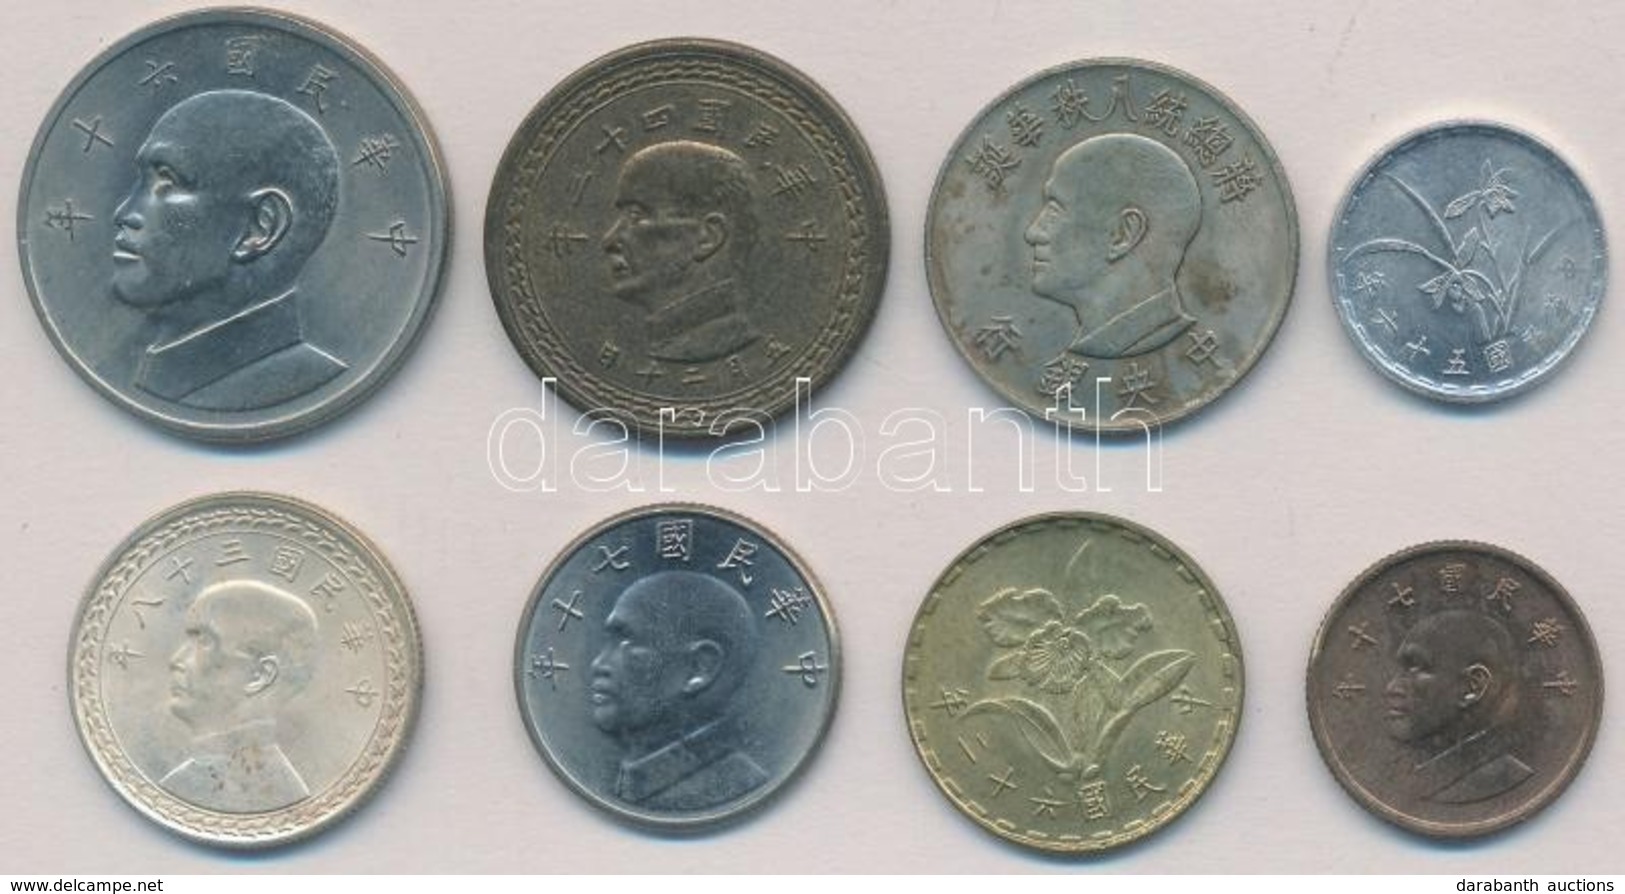 8db-os Vegyes Tajvani Fémpénz Tétel T:1-,2
8pcs Of Various Metal Coins From Taiwan C:AU,XF - Zonder Classificatie